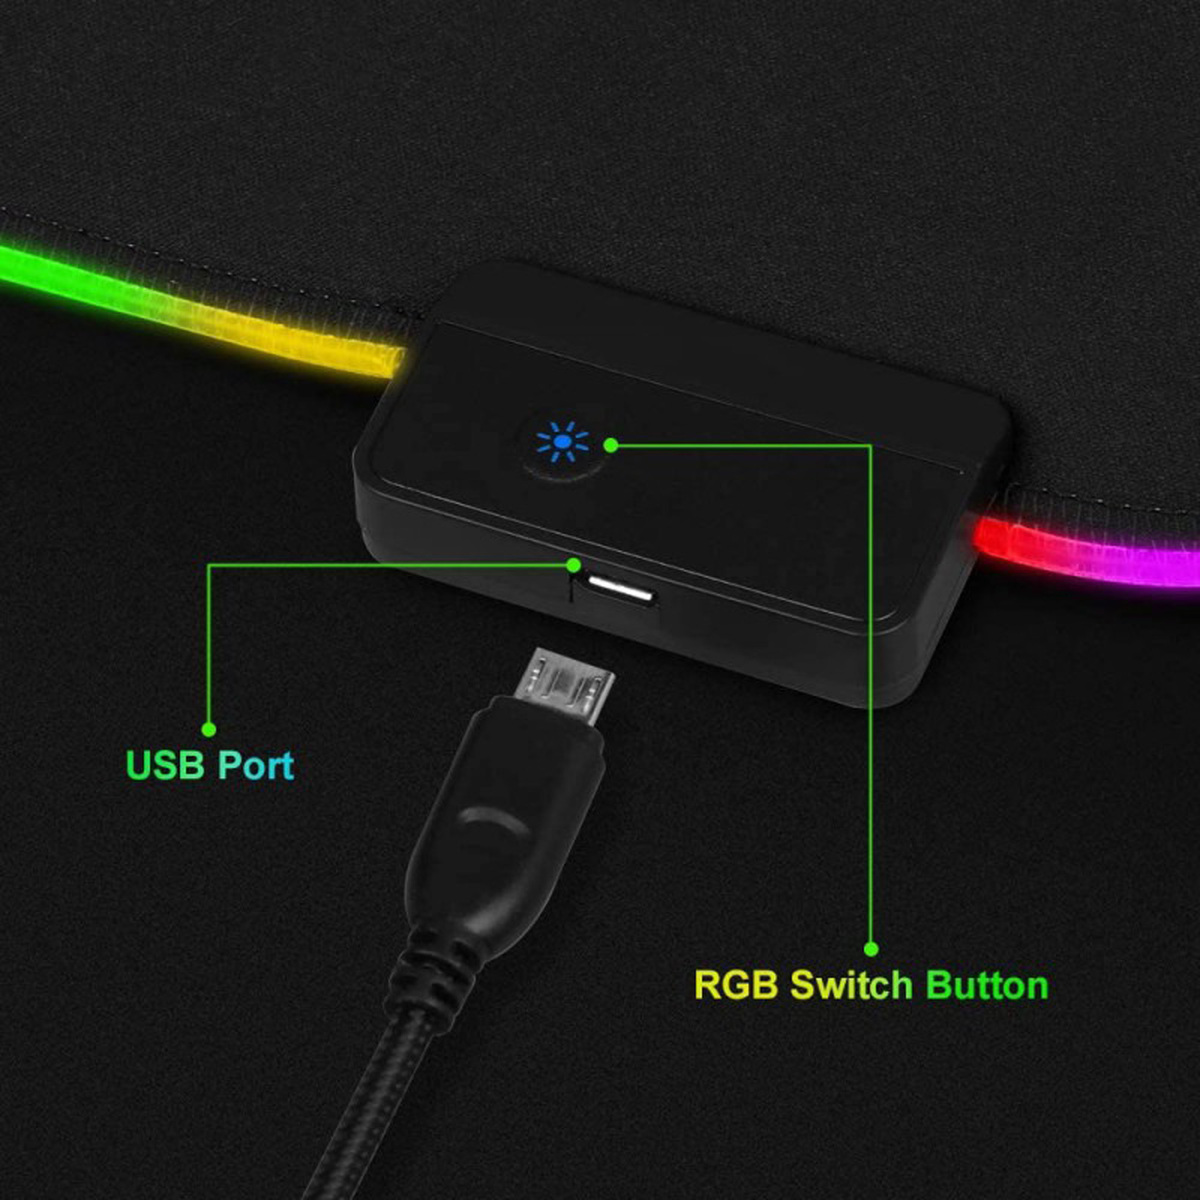 Trands RGB Gaming Mouse Pad, Black, TR-GMP476